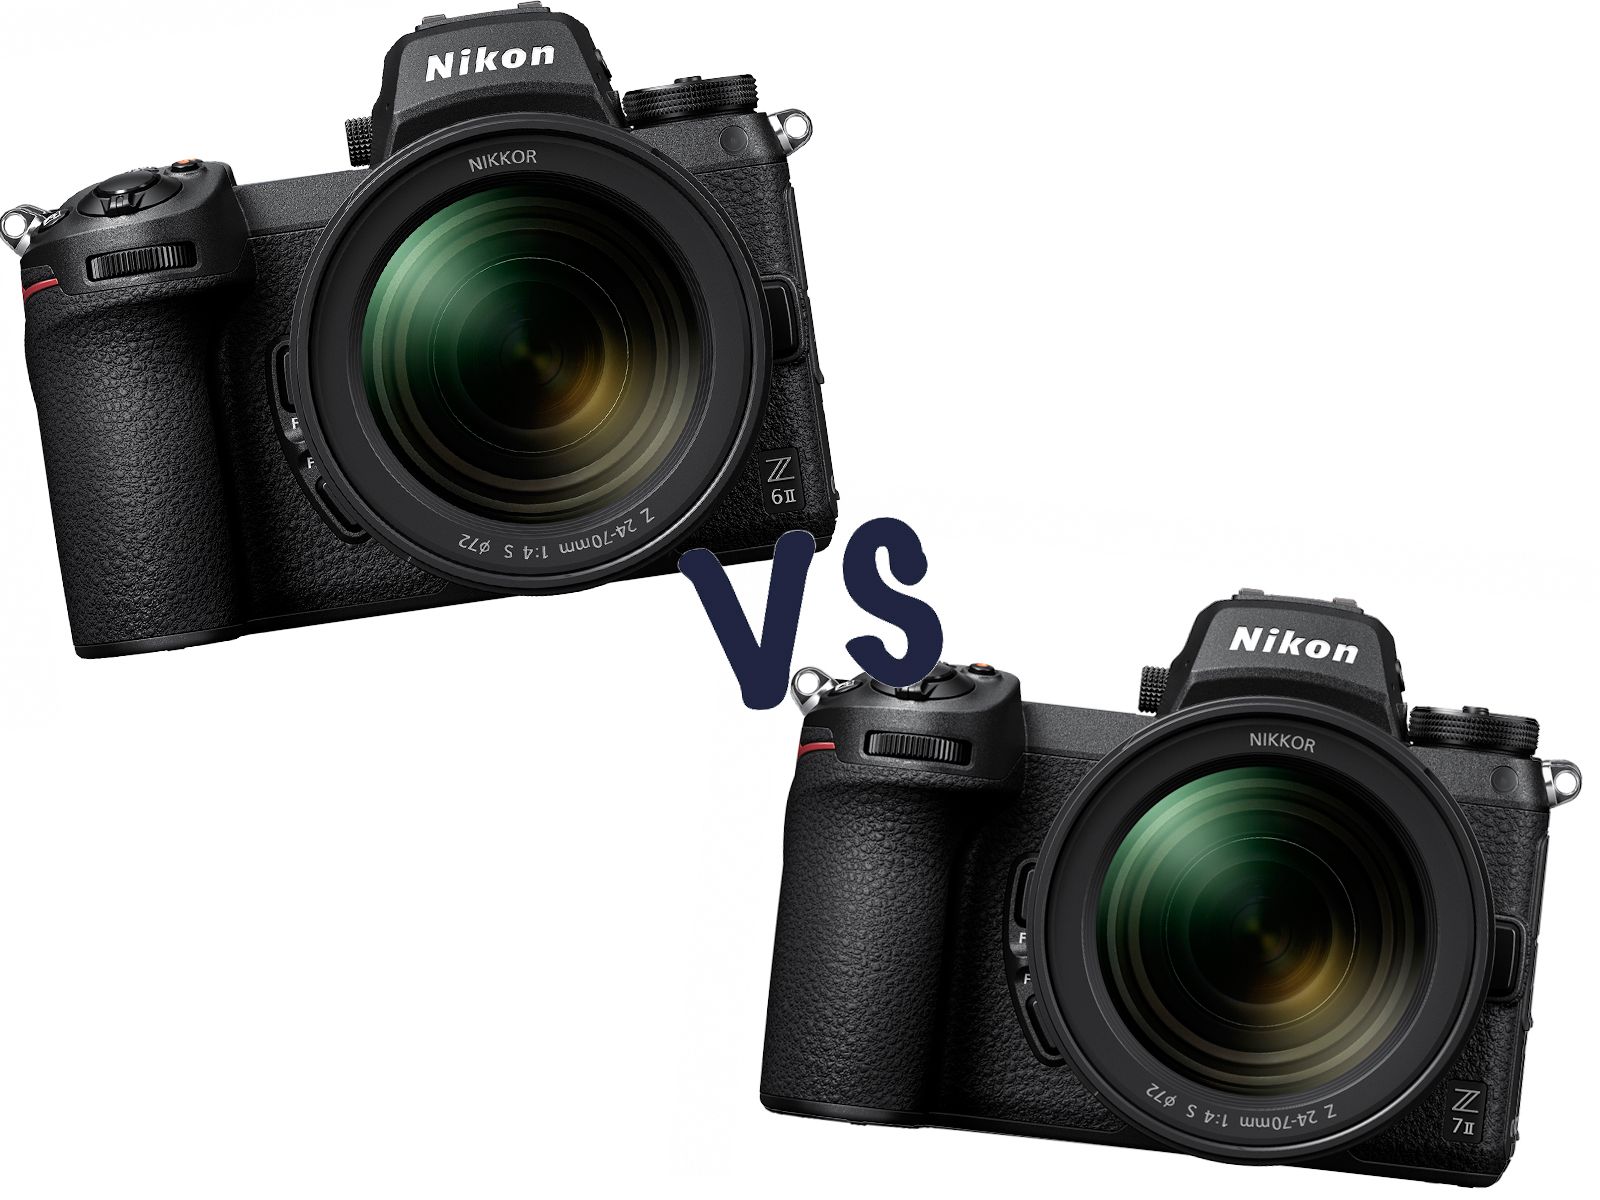 Nikon Z6 II and Z7 II mirrorless cameras officially announced - Nikon Rumors